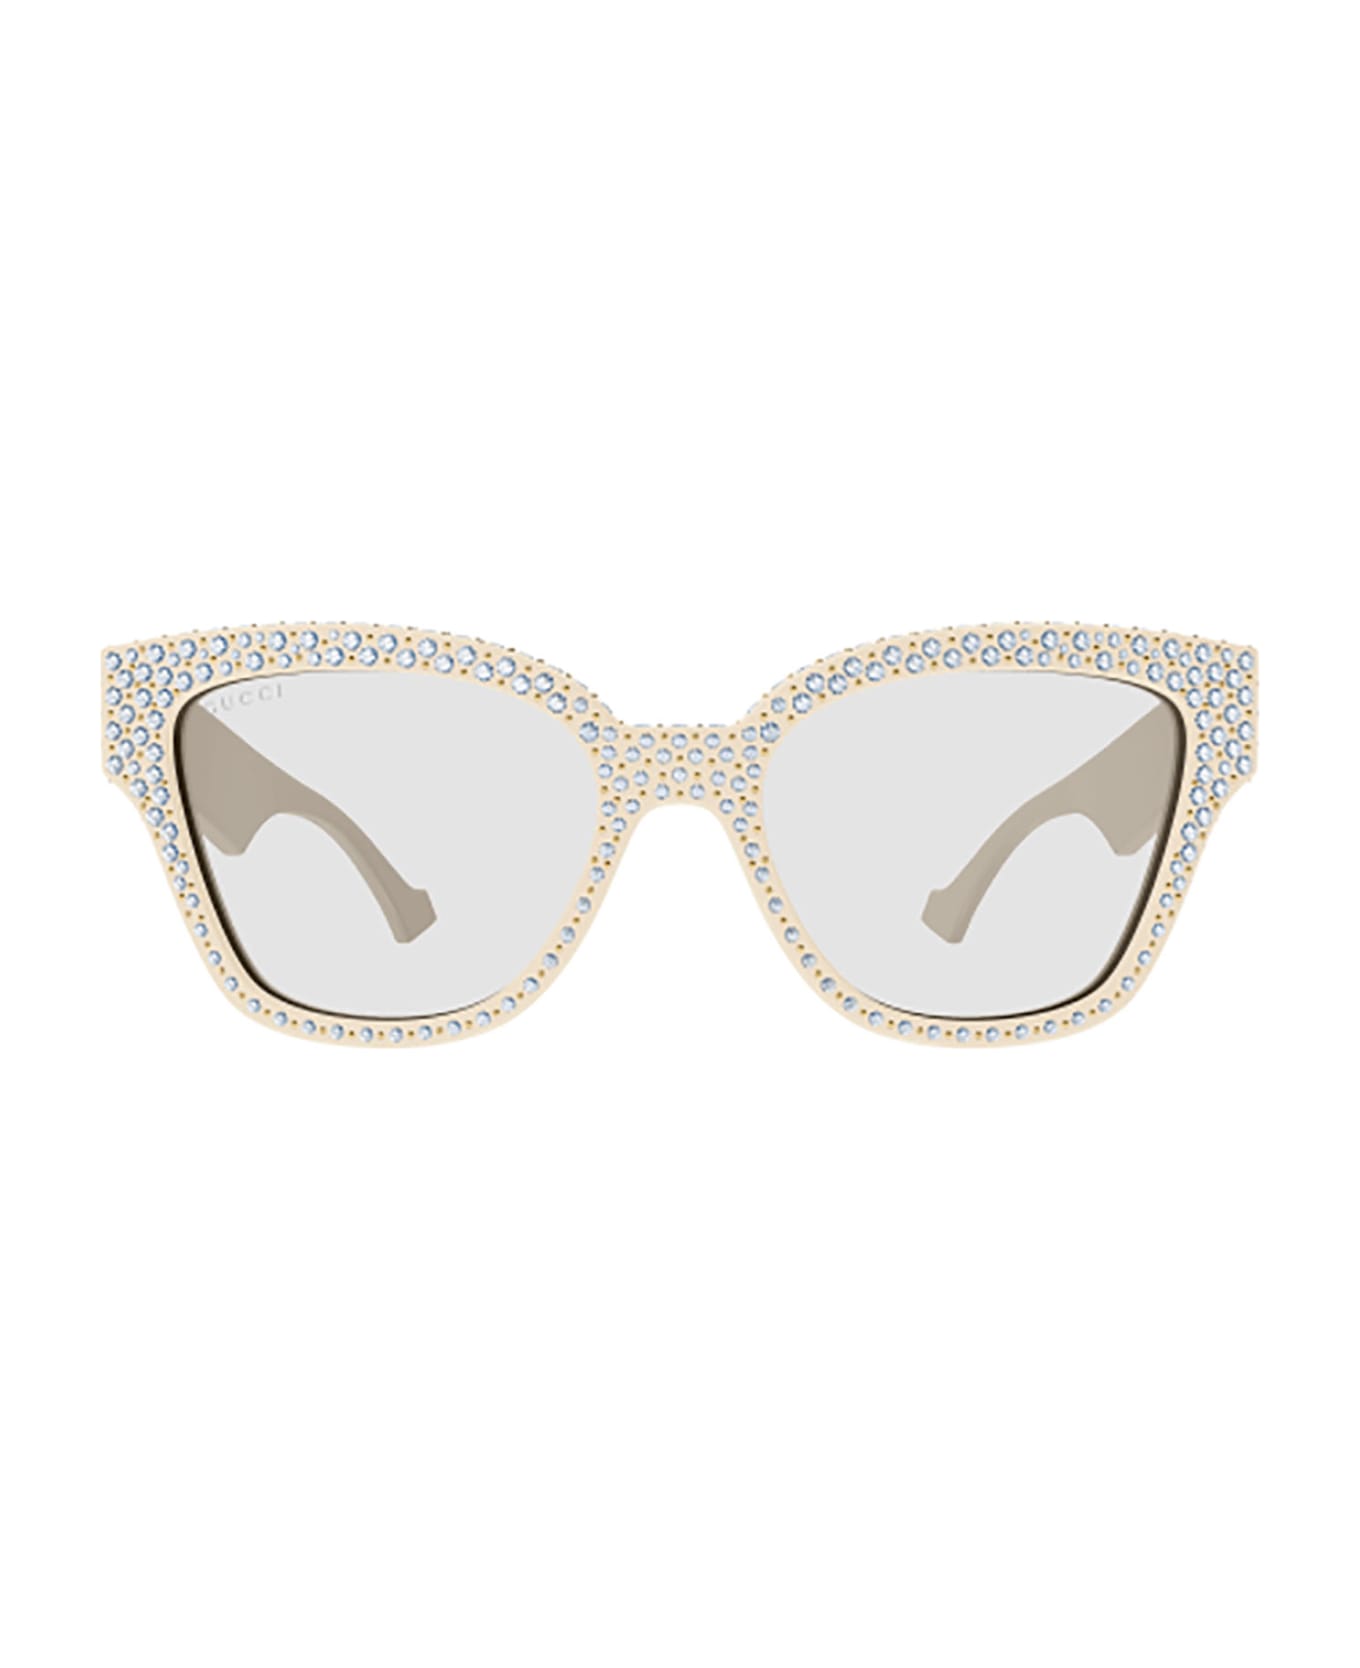 Gucci Eyewear GG1424S Sunglasses - Ivory Ivory Transpare